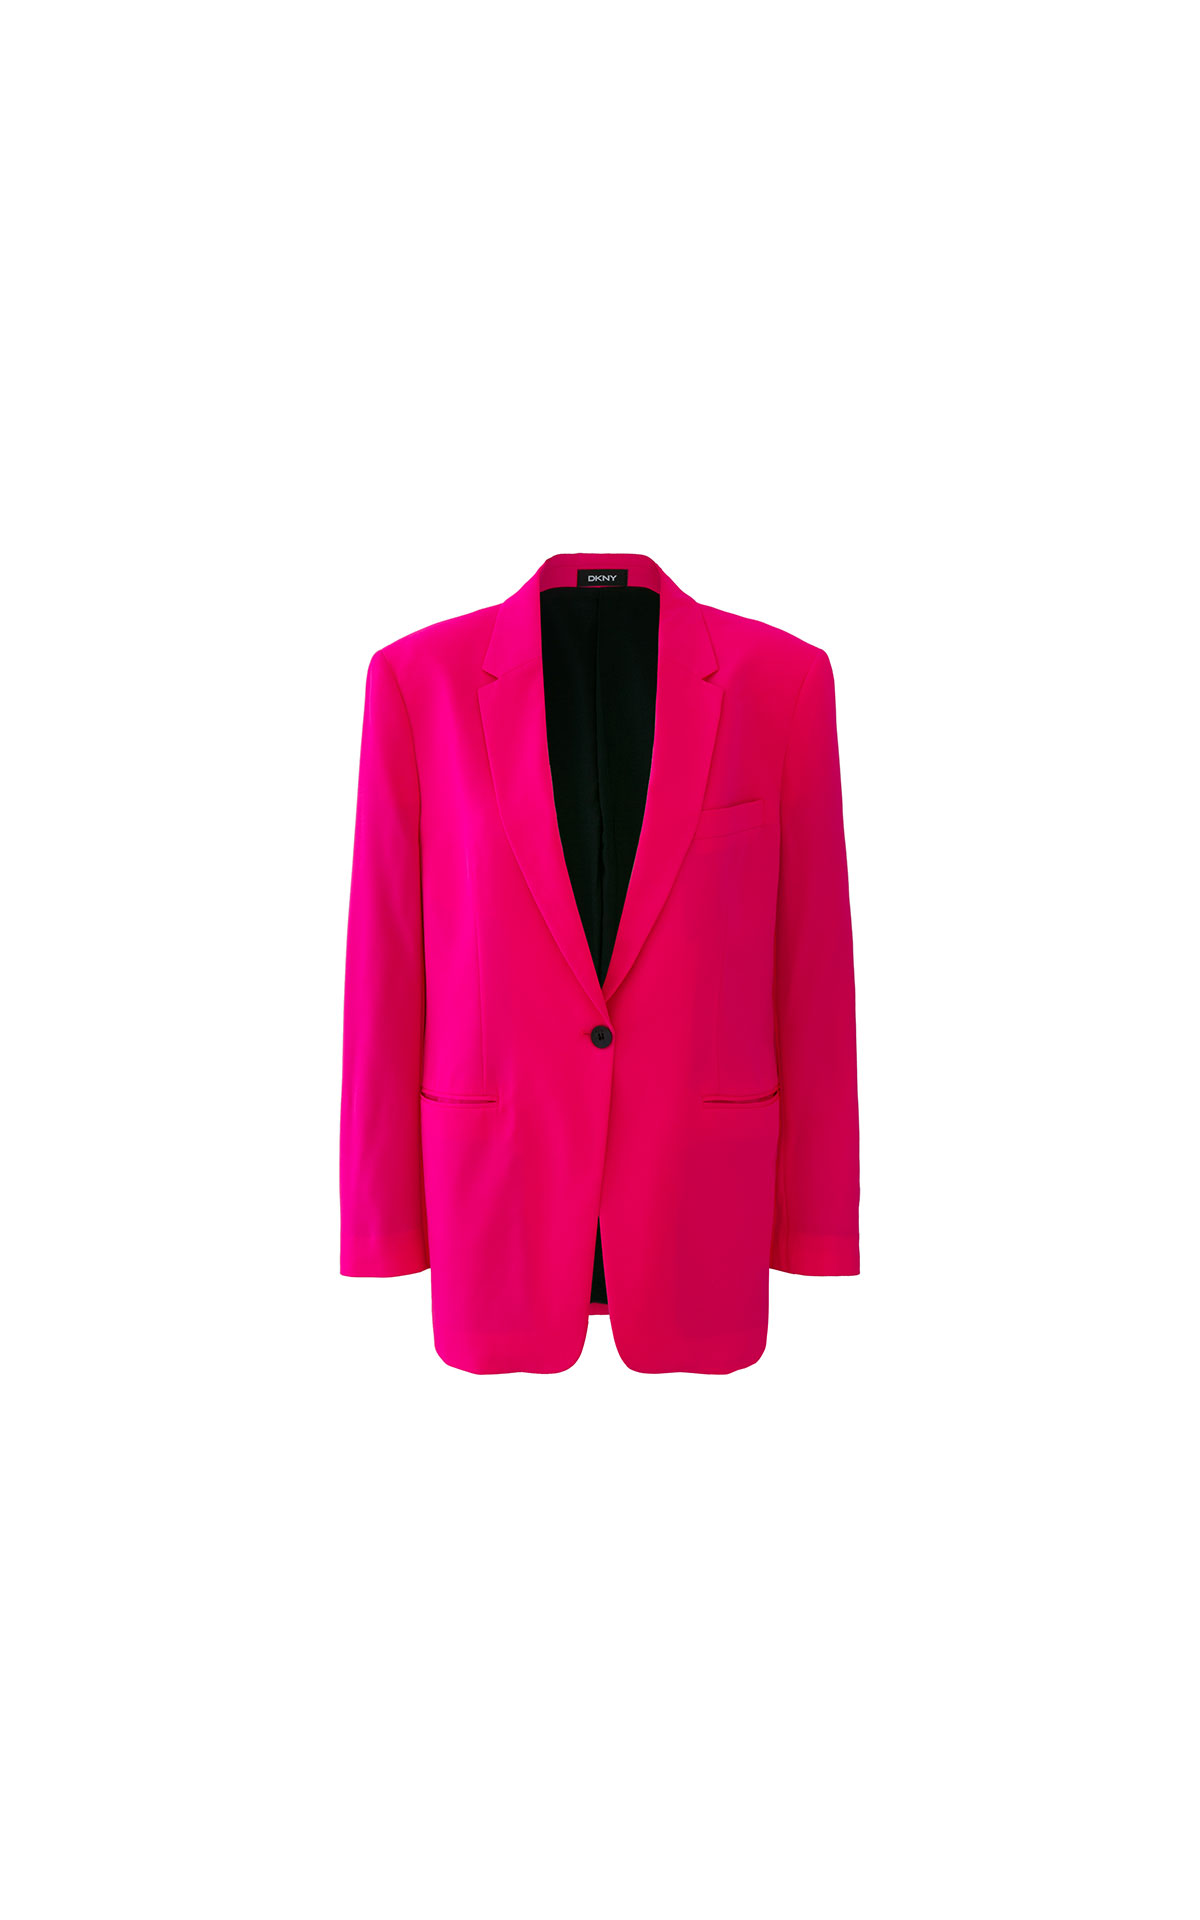 DKNY Pink blazer from Bicester Village